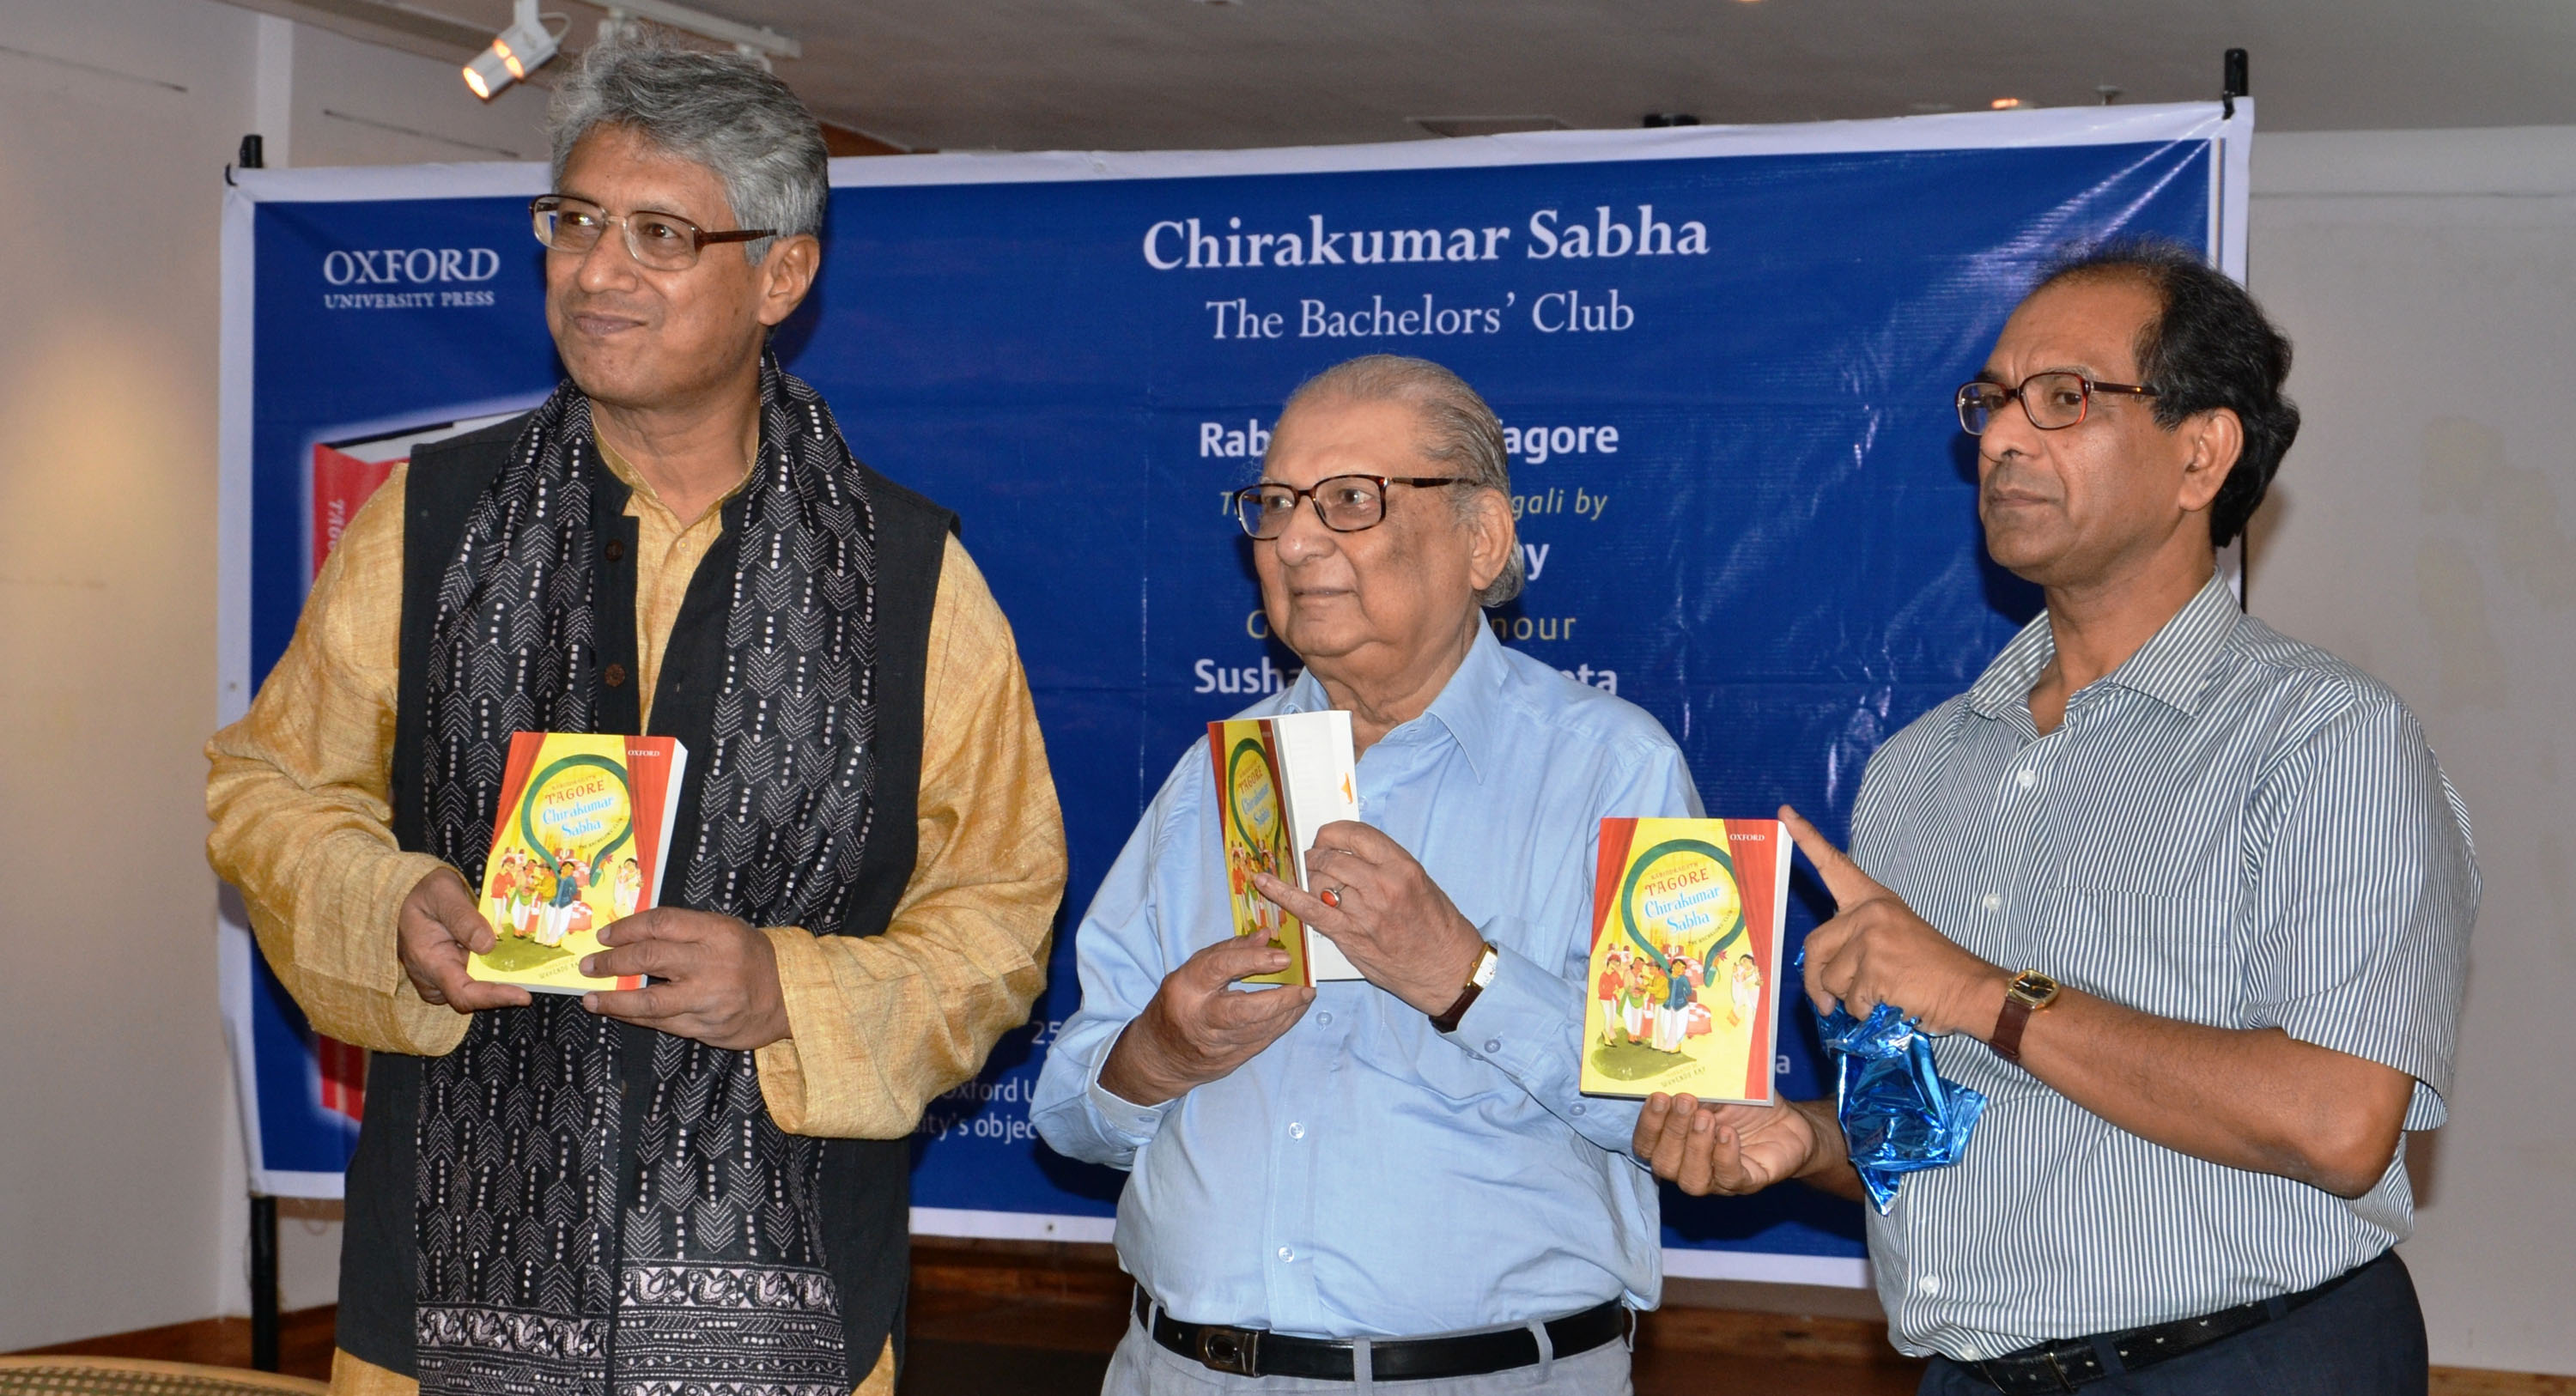 Tagore's 'Chirakumar Sabha' translated to English 